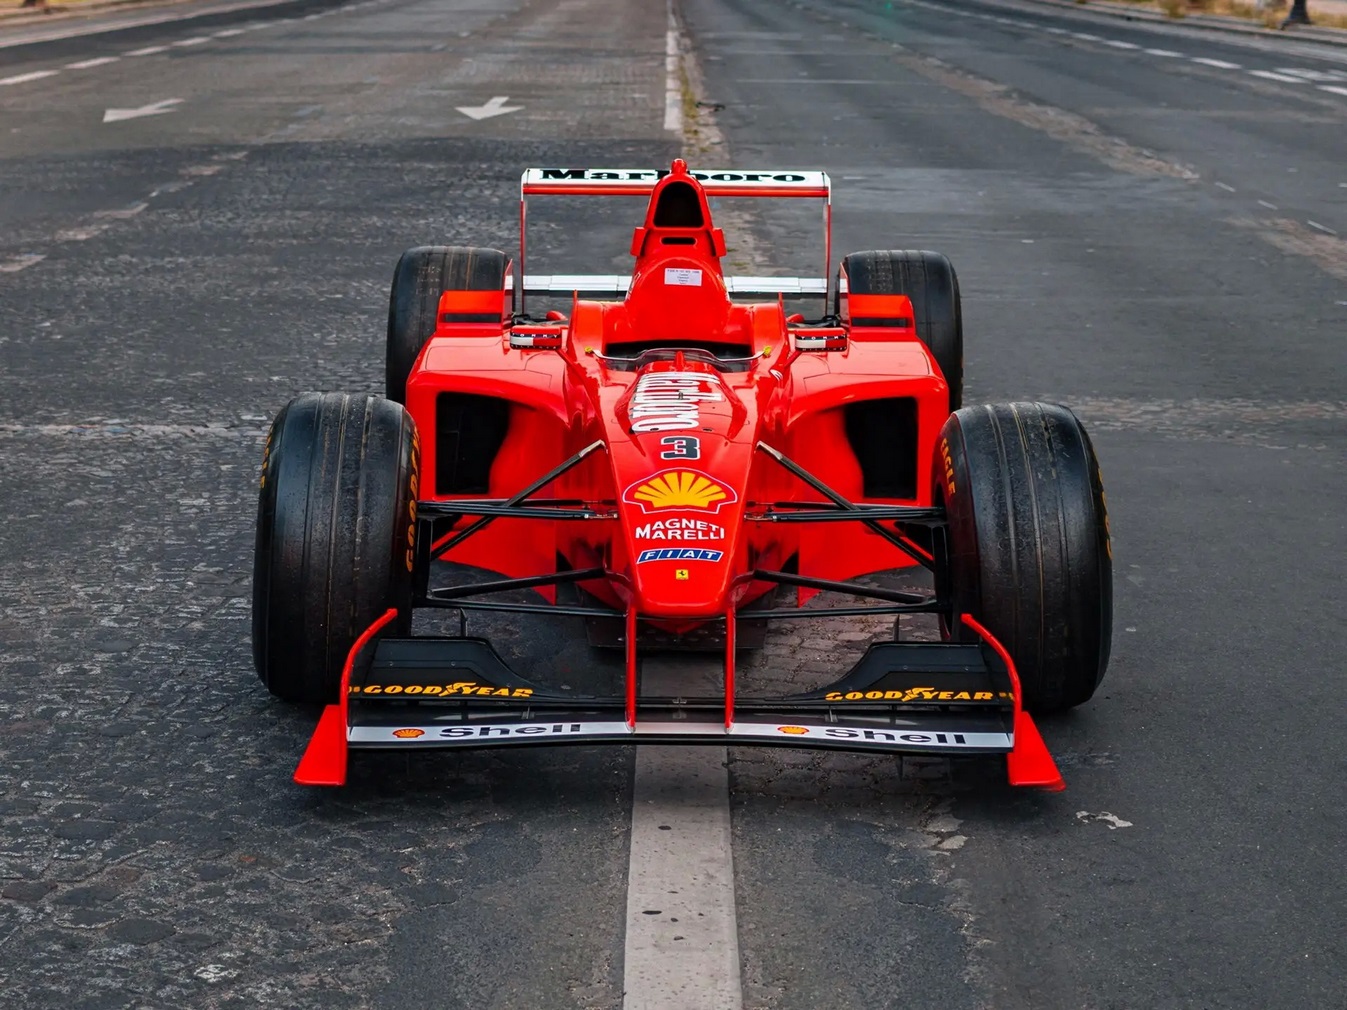 Michael Schumacher's 1998 Ferrari F300 #187 is for sale